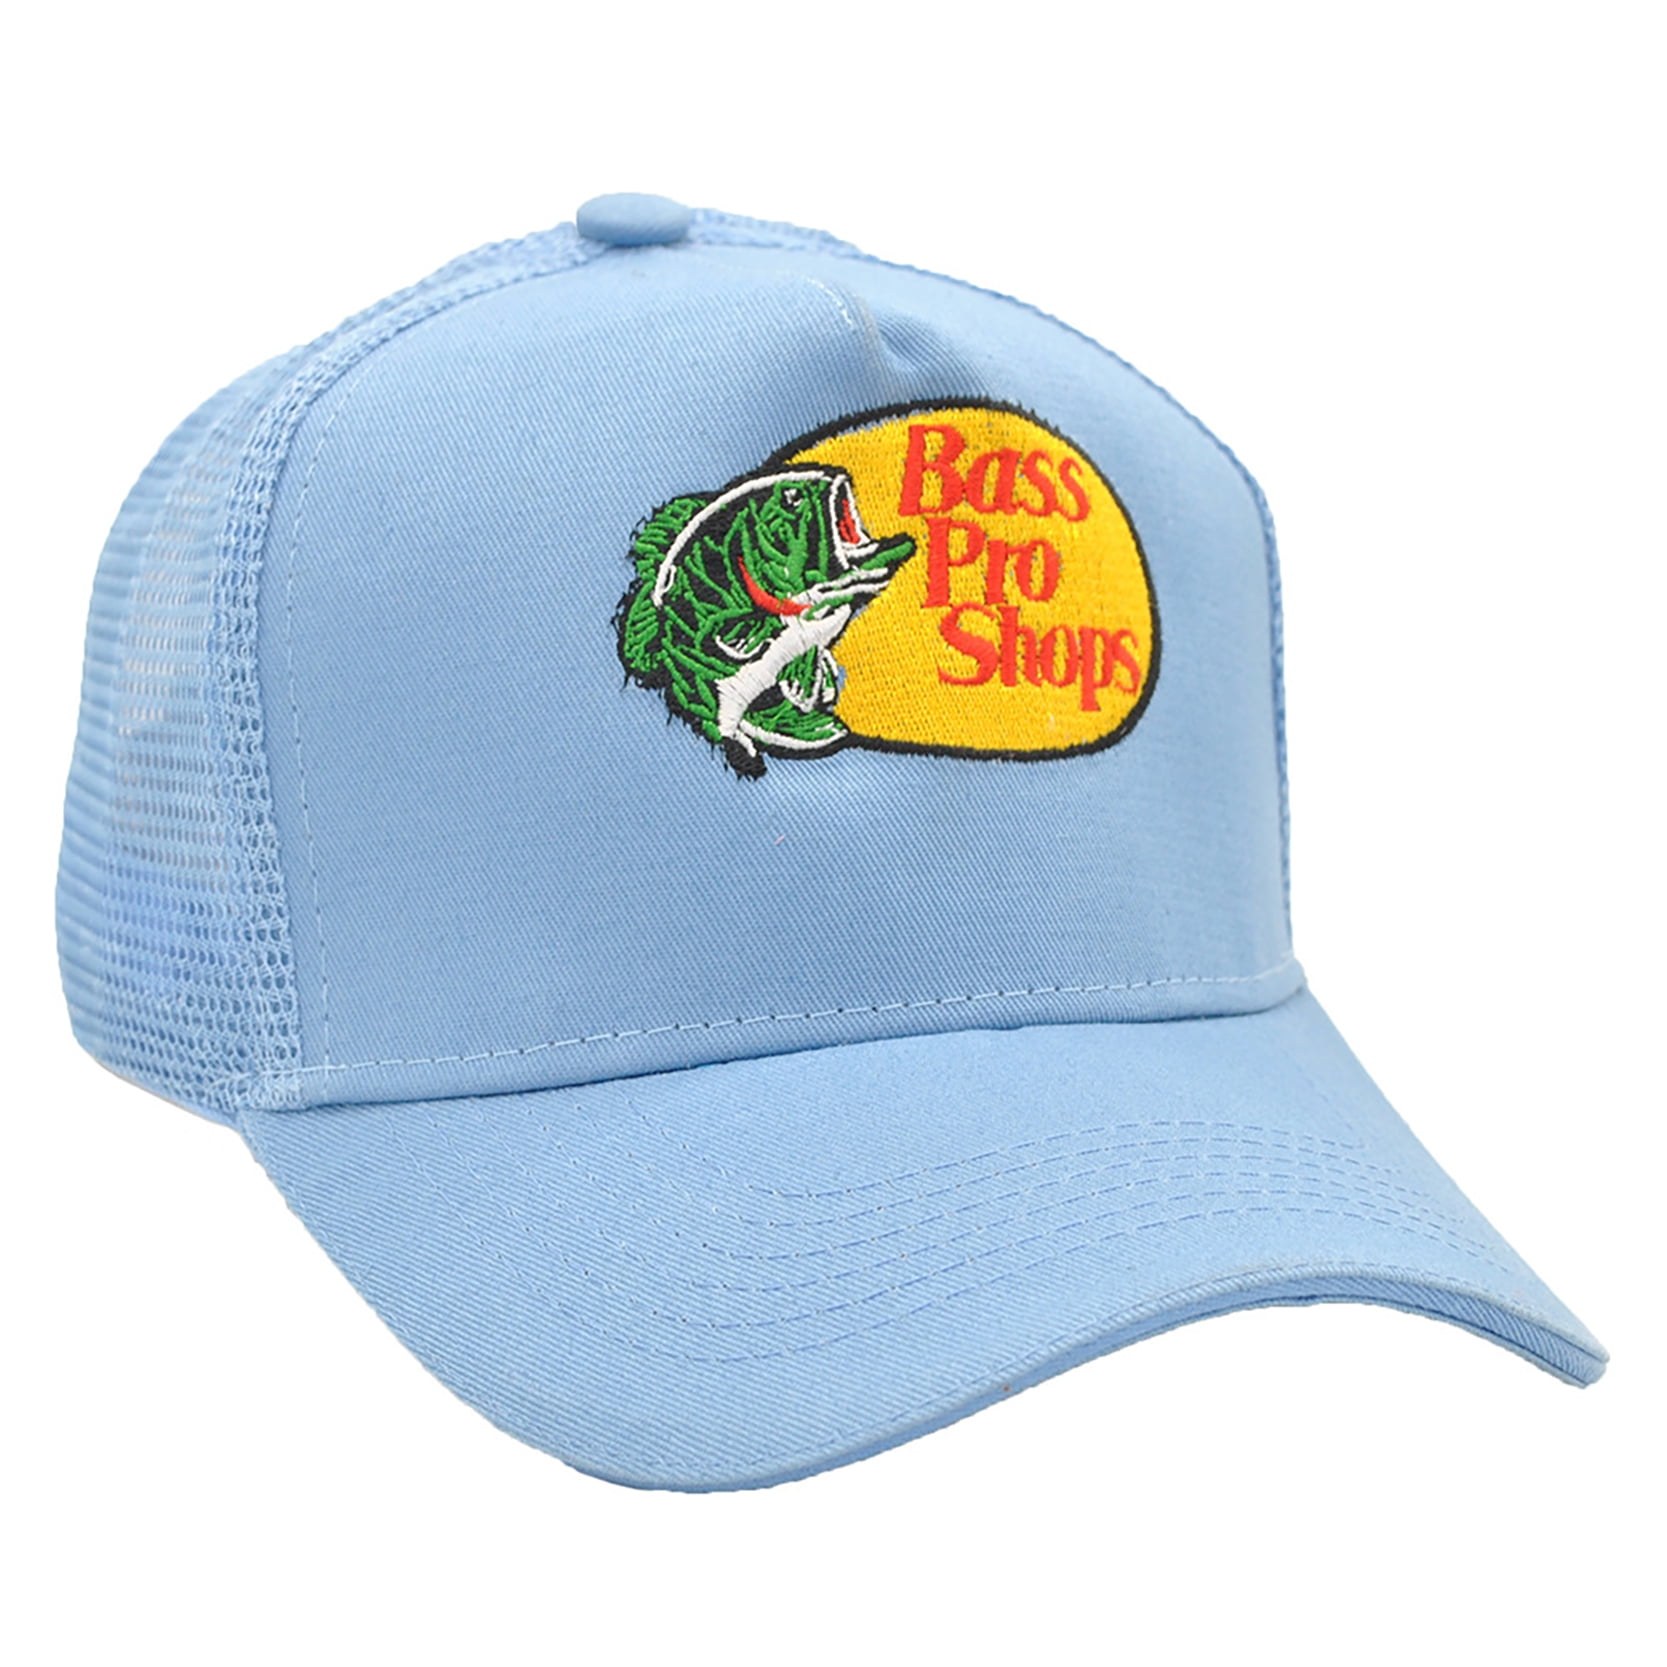 Bass Pro Shop Cap Men's Trucker Hat Mesh Cap - Adjustable Snapback ...